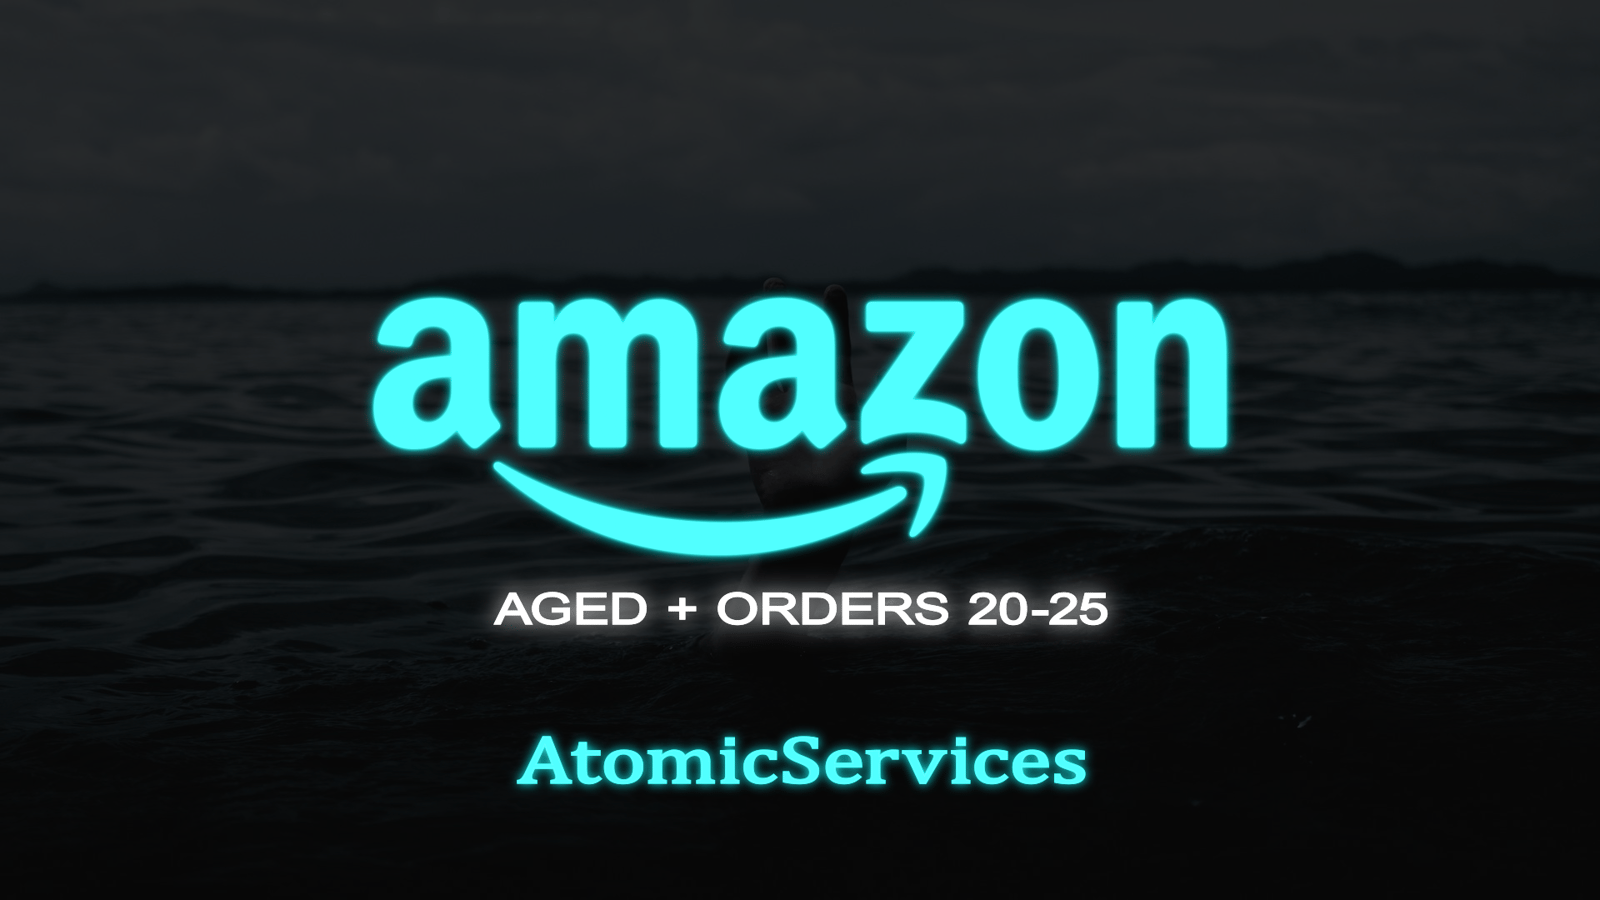 Amazon Aged Accounts | 8 Years+ With 18-25 Order History [Yahoo]